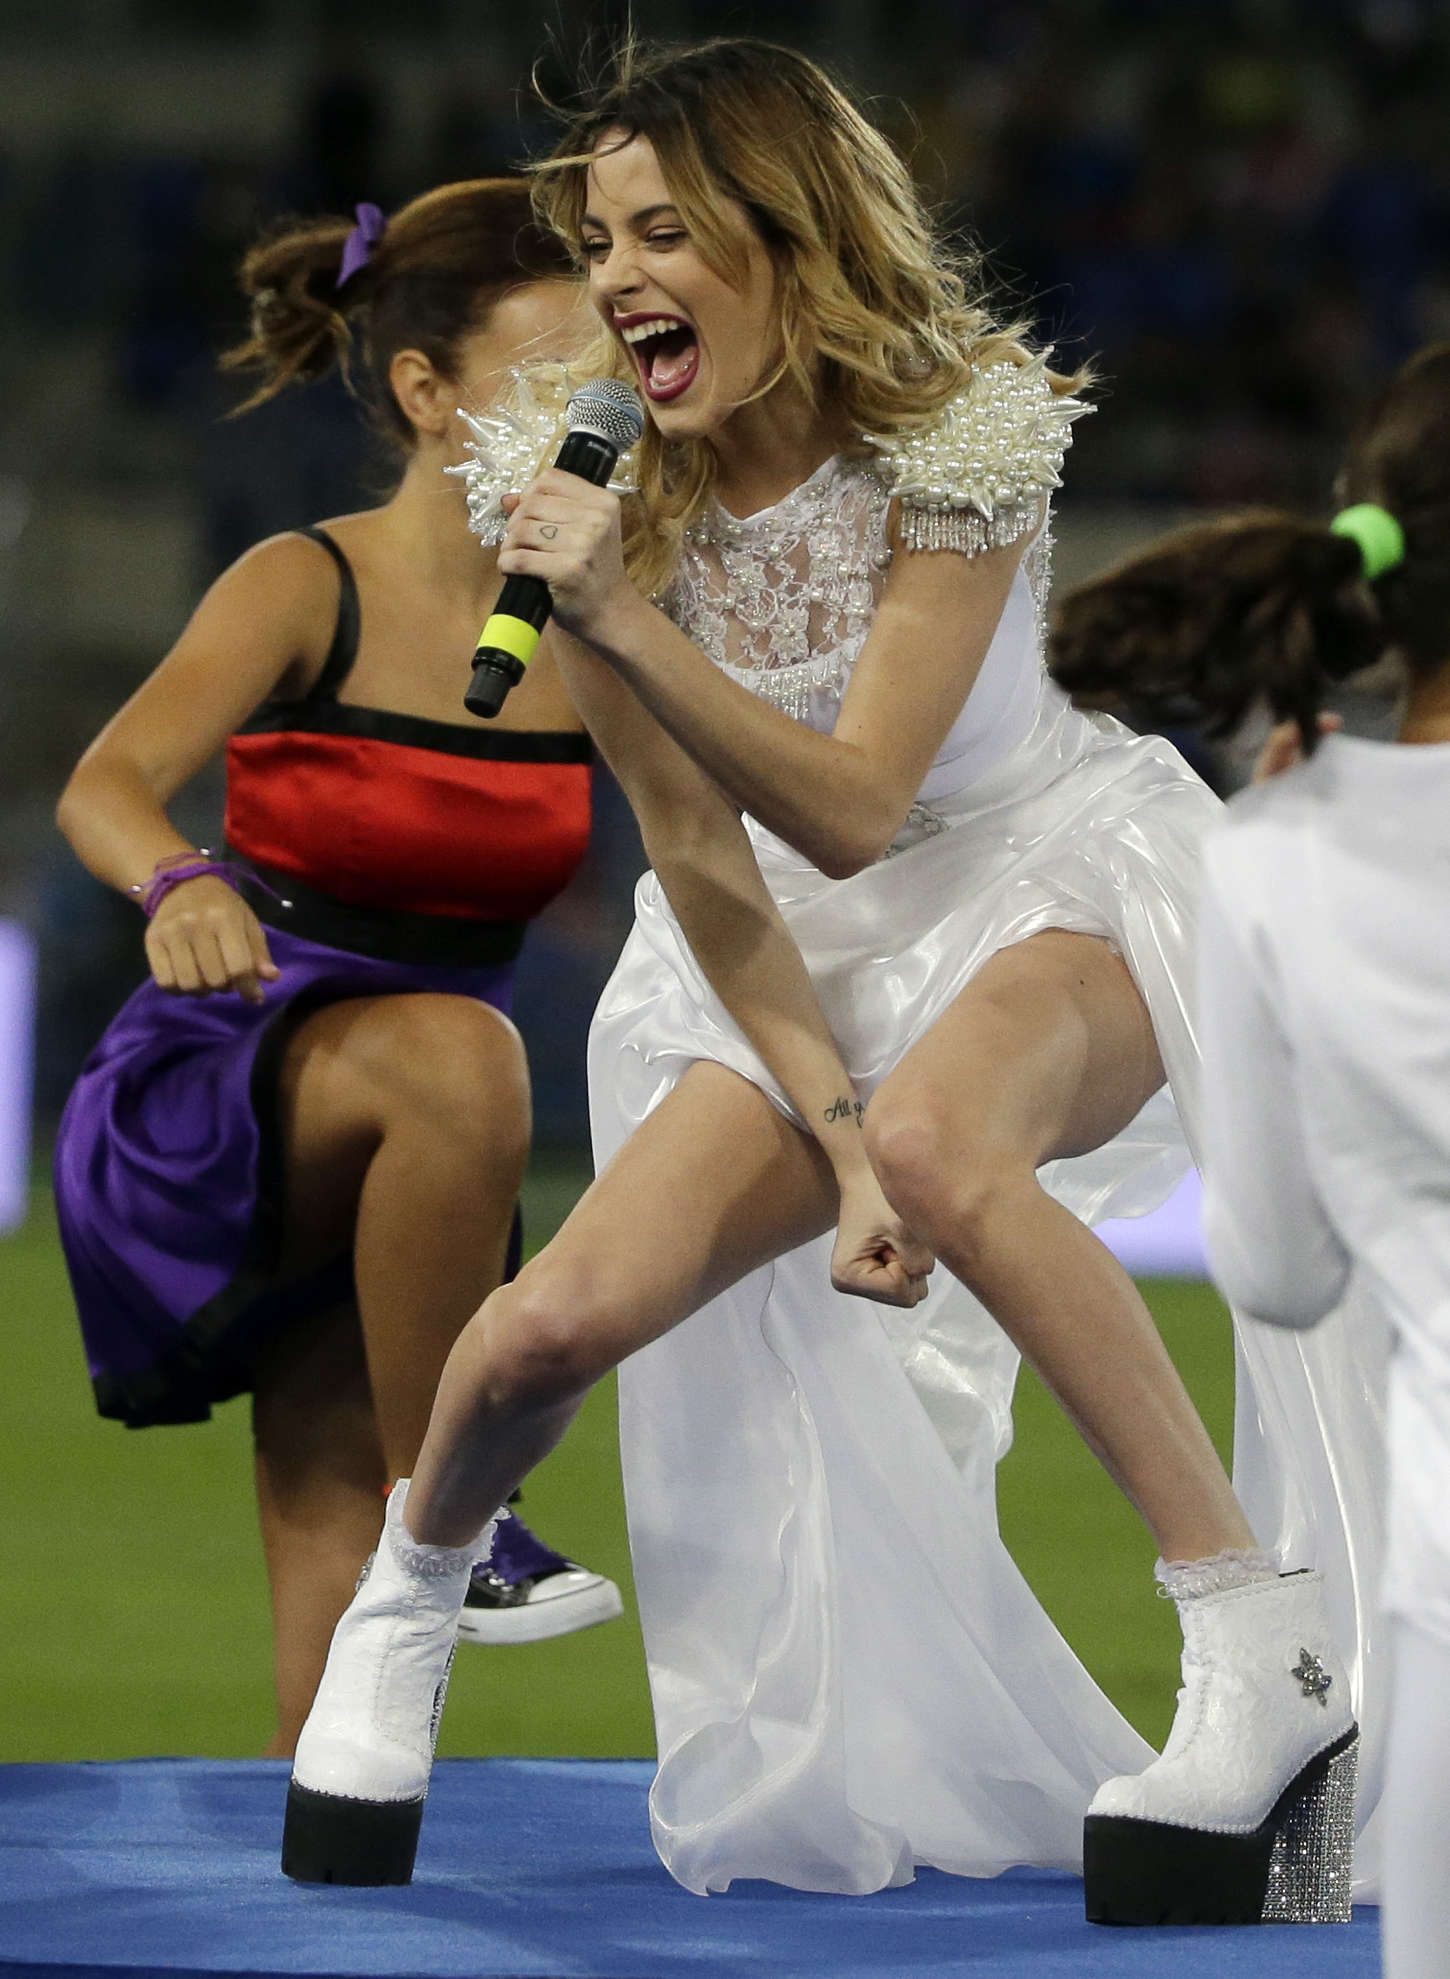 Martina Stoessel Performance at Romes Olympic Stadium